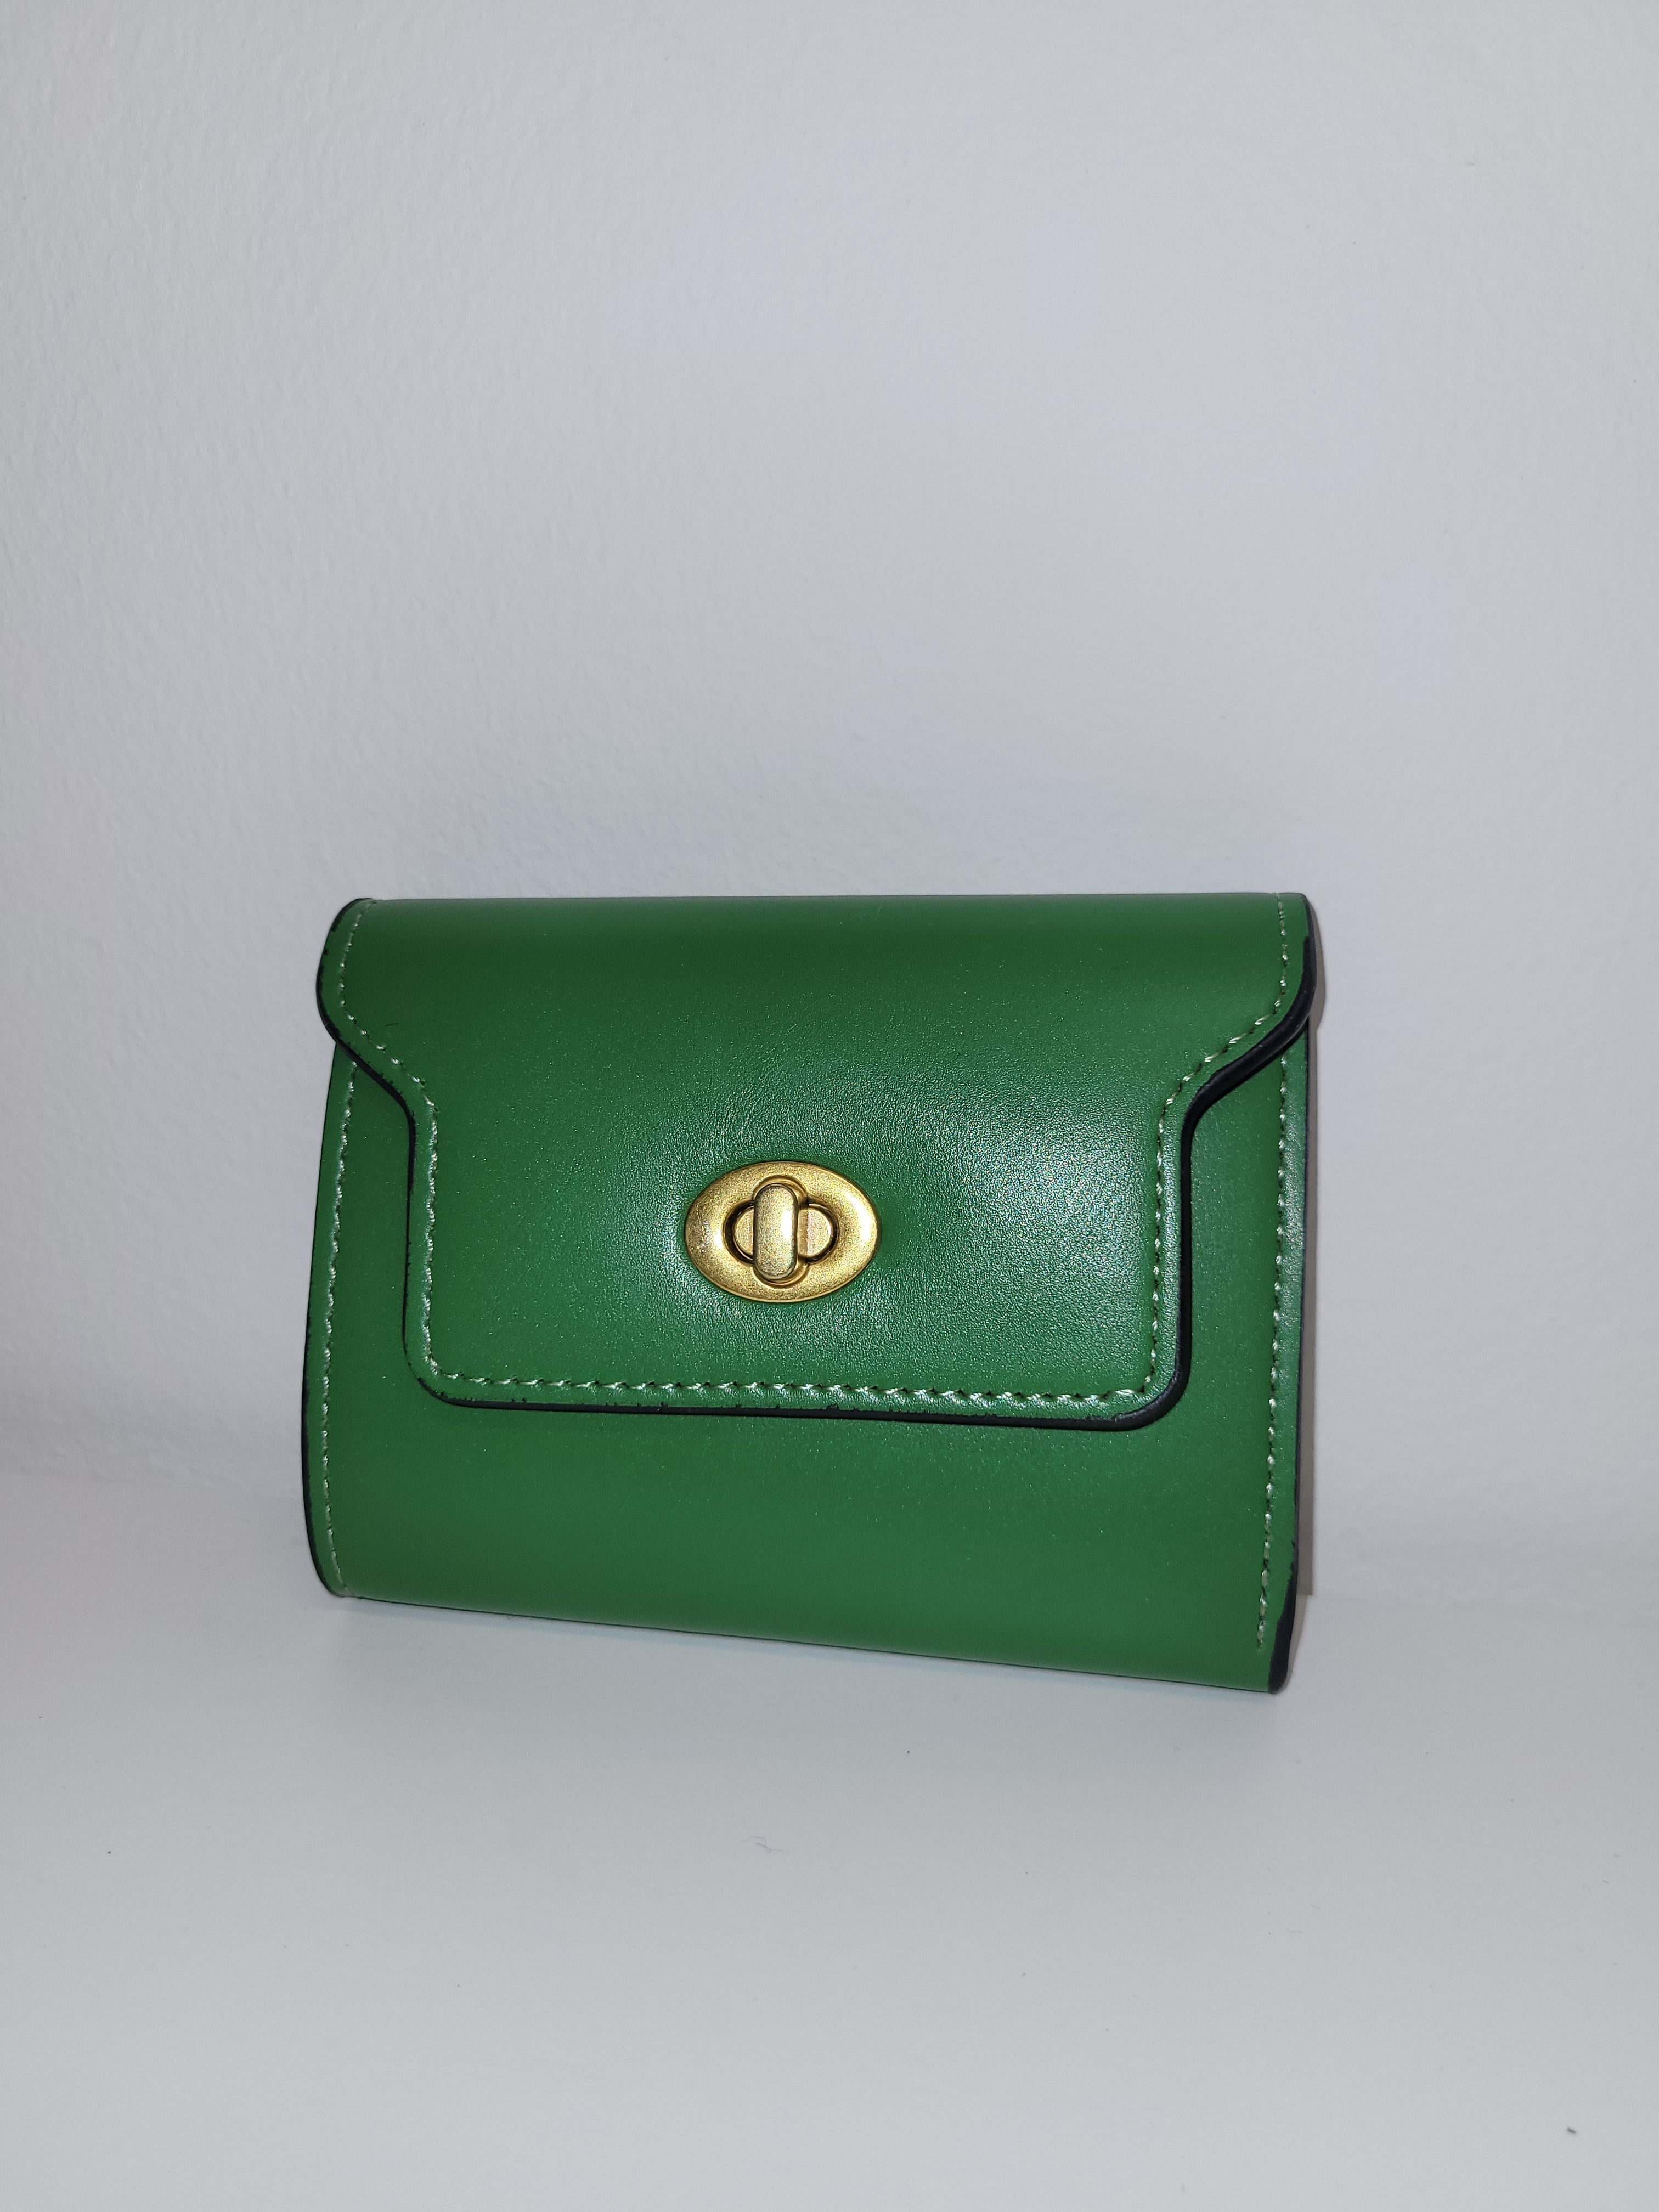 Coach Gallery Tote Shoulder Handbag Purse F19252 Green Leather with Scarf |  eBay